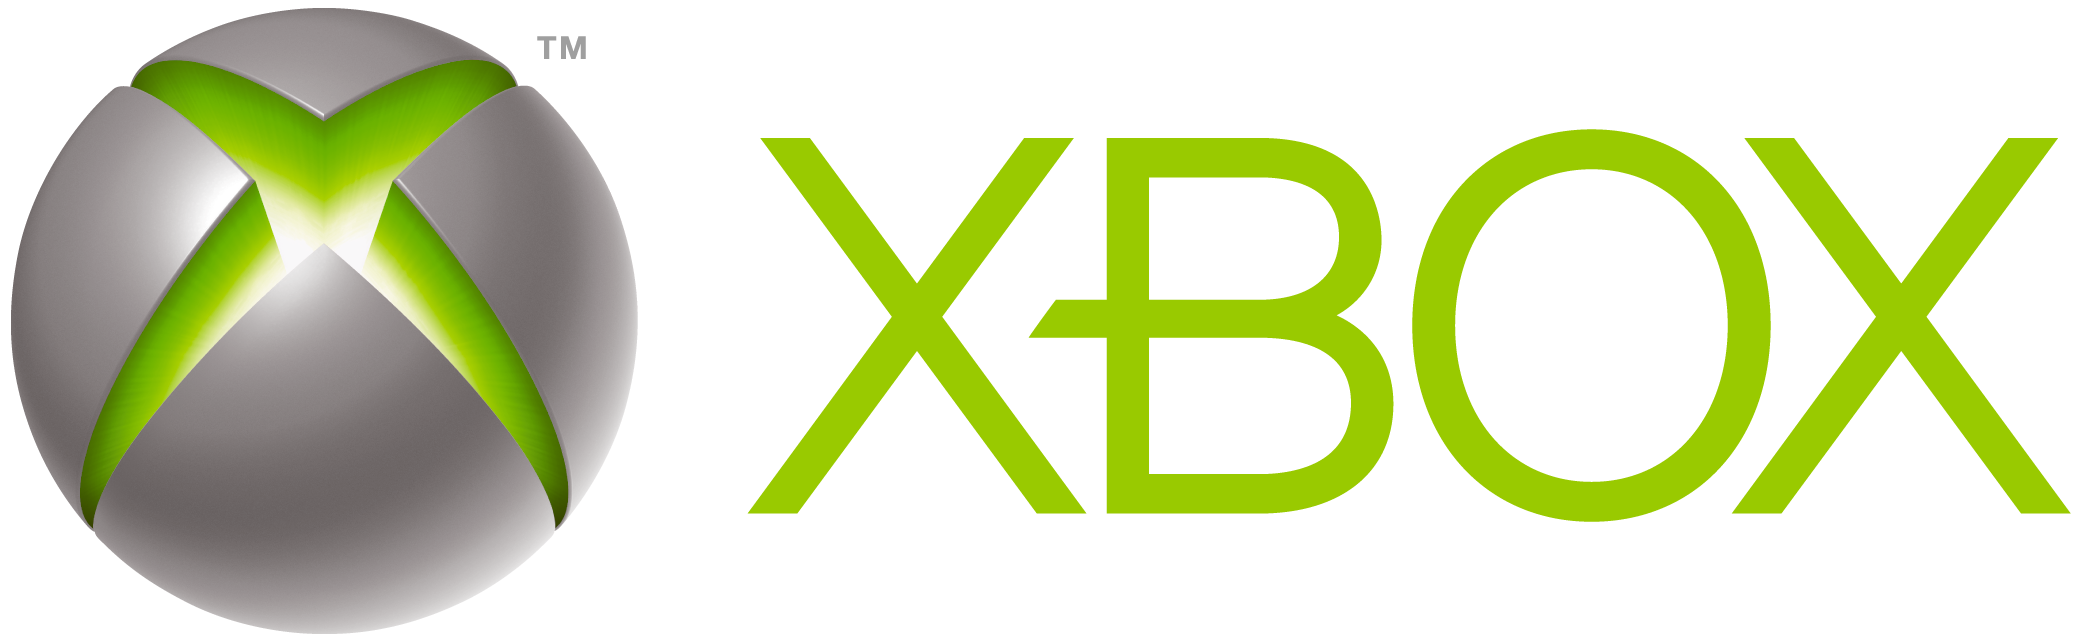 xbox live arcade logo png